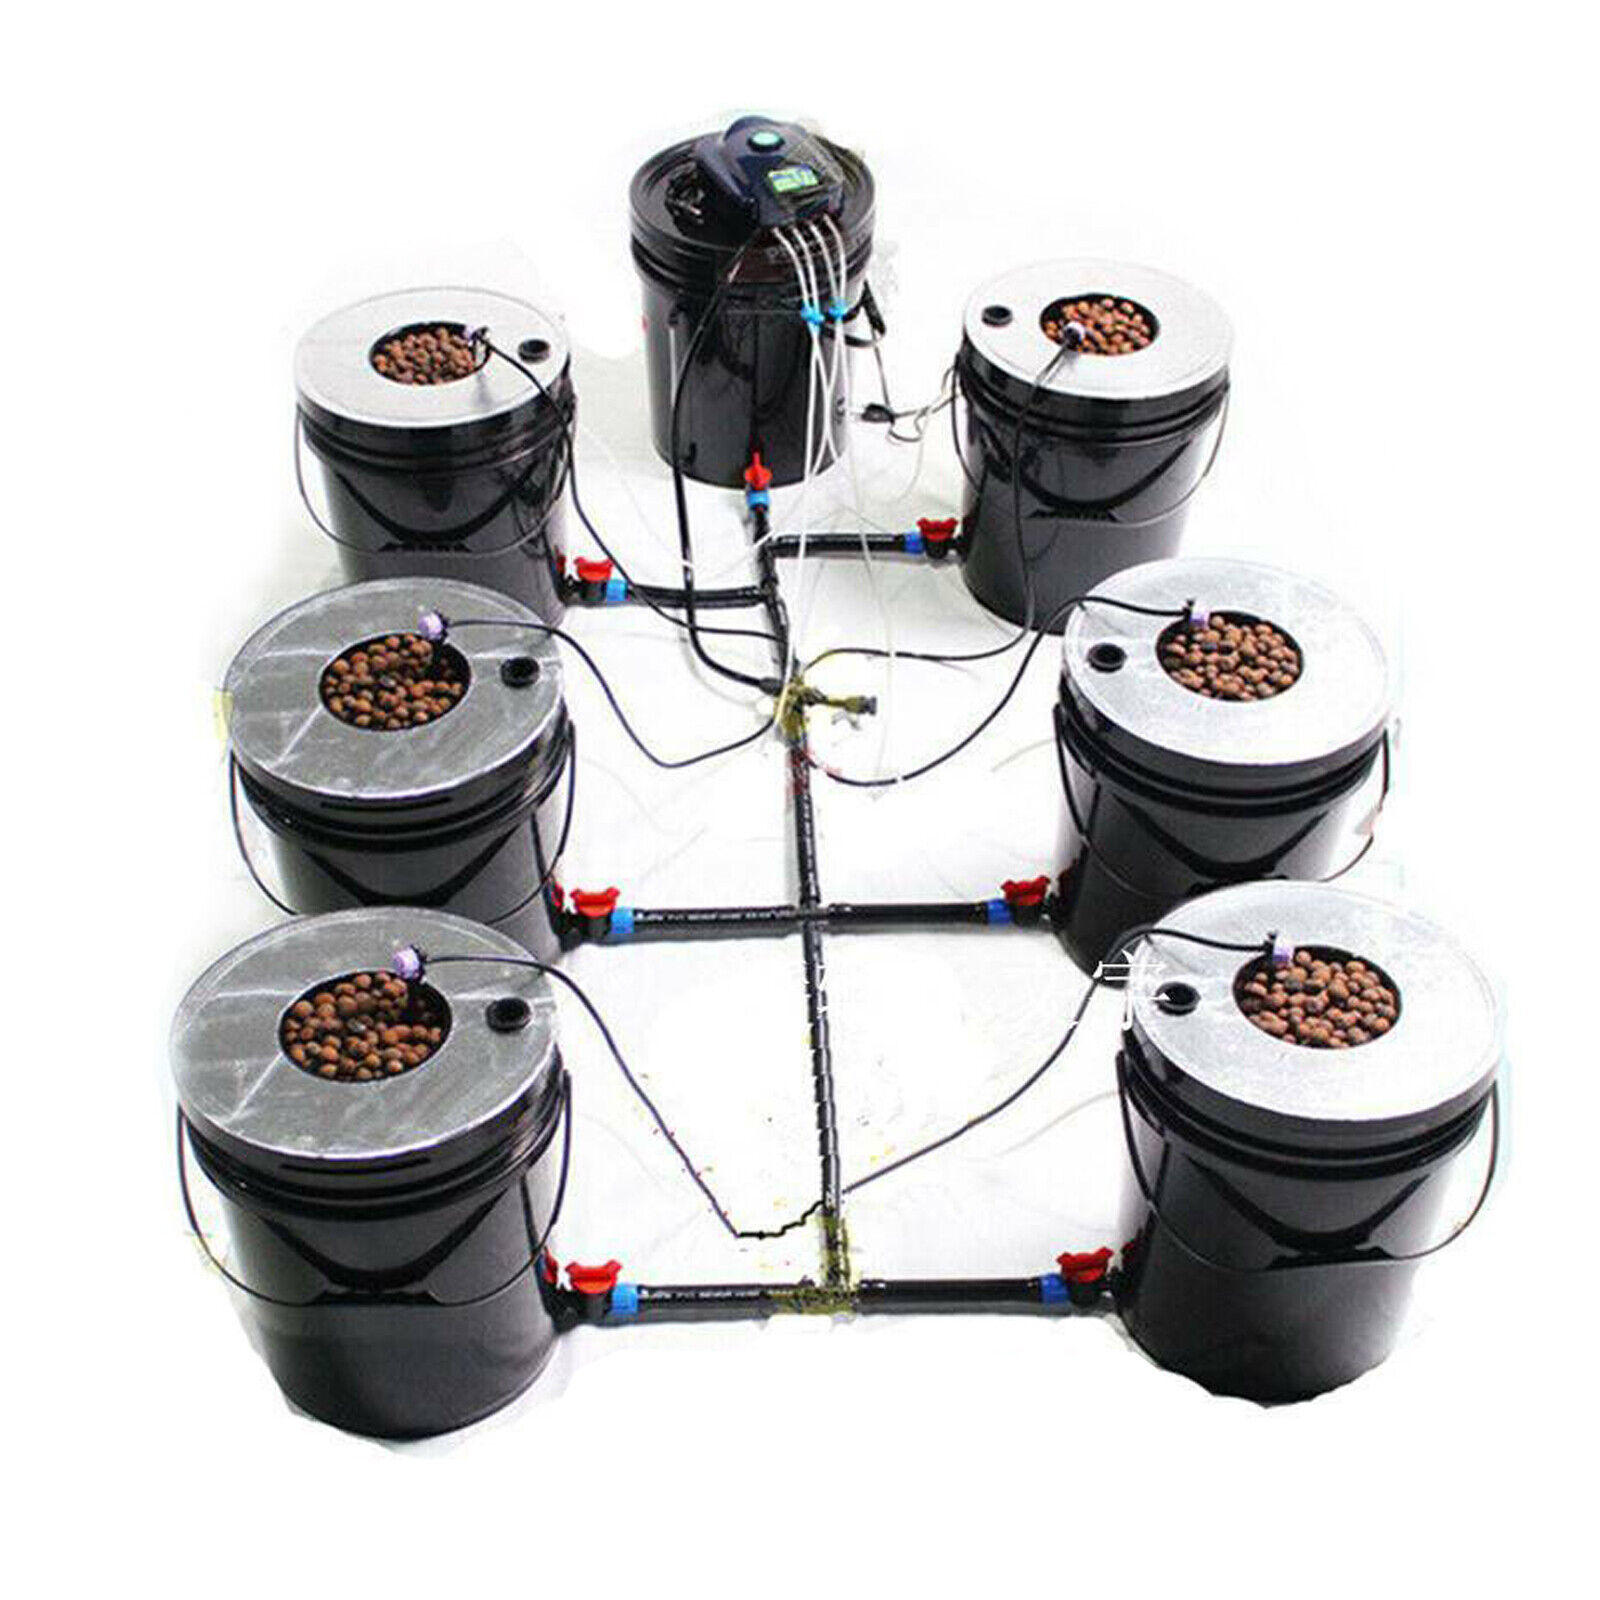 DWC 5 Gallon 6 Buckets Hydroponics Growing System Recirculating Growing Kit